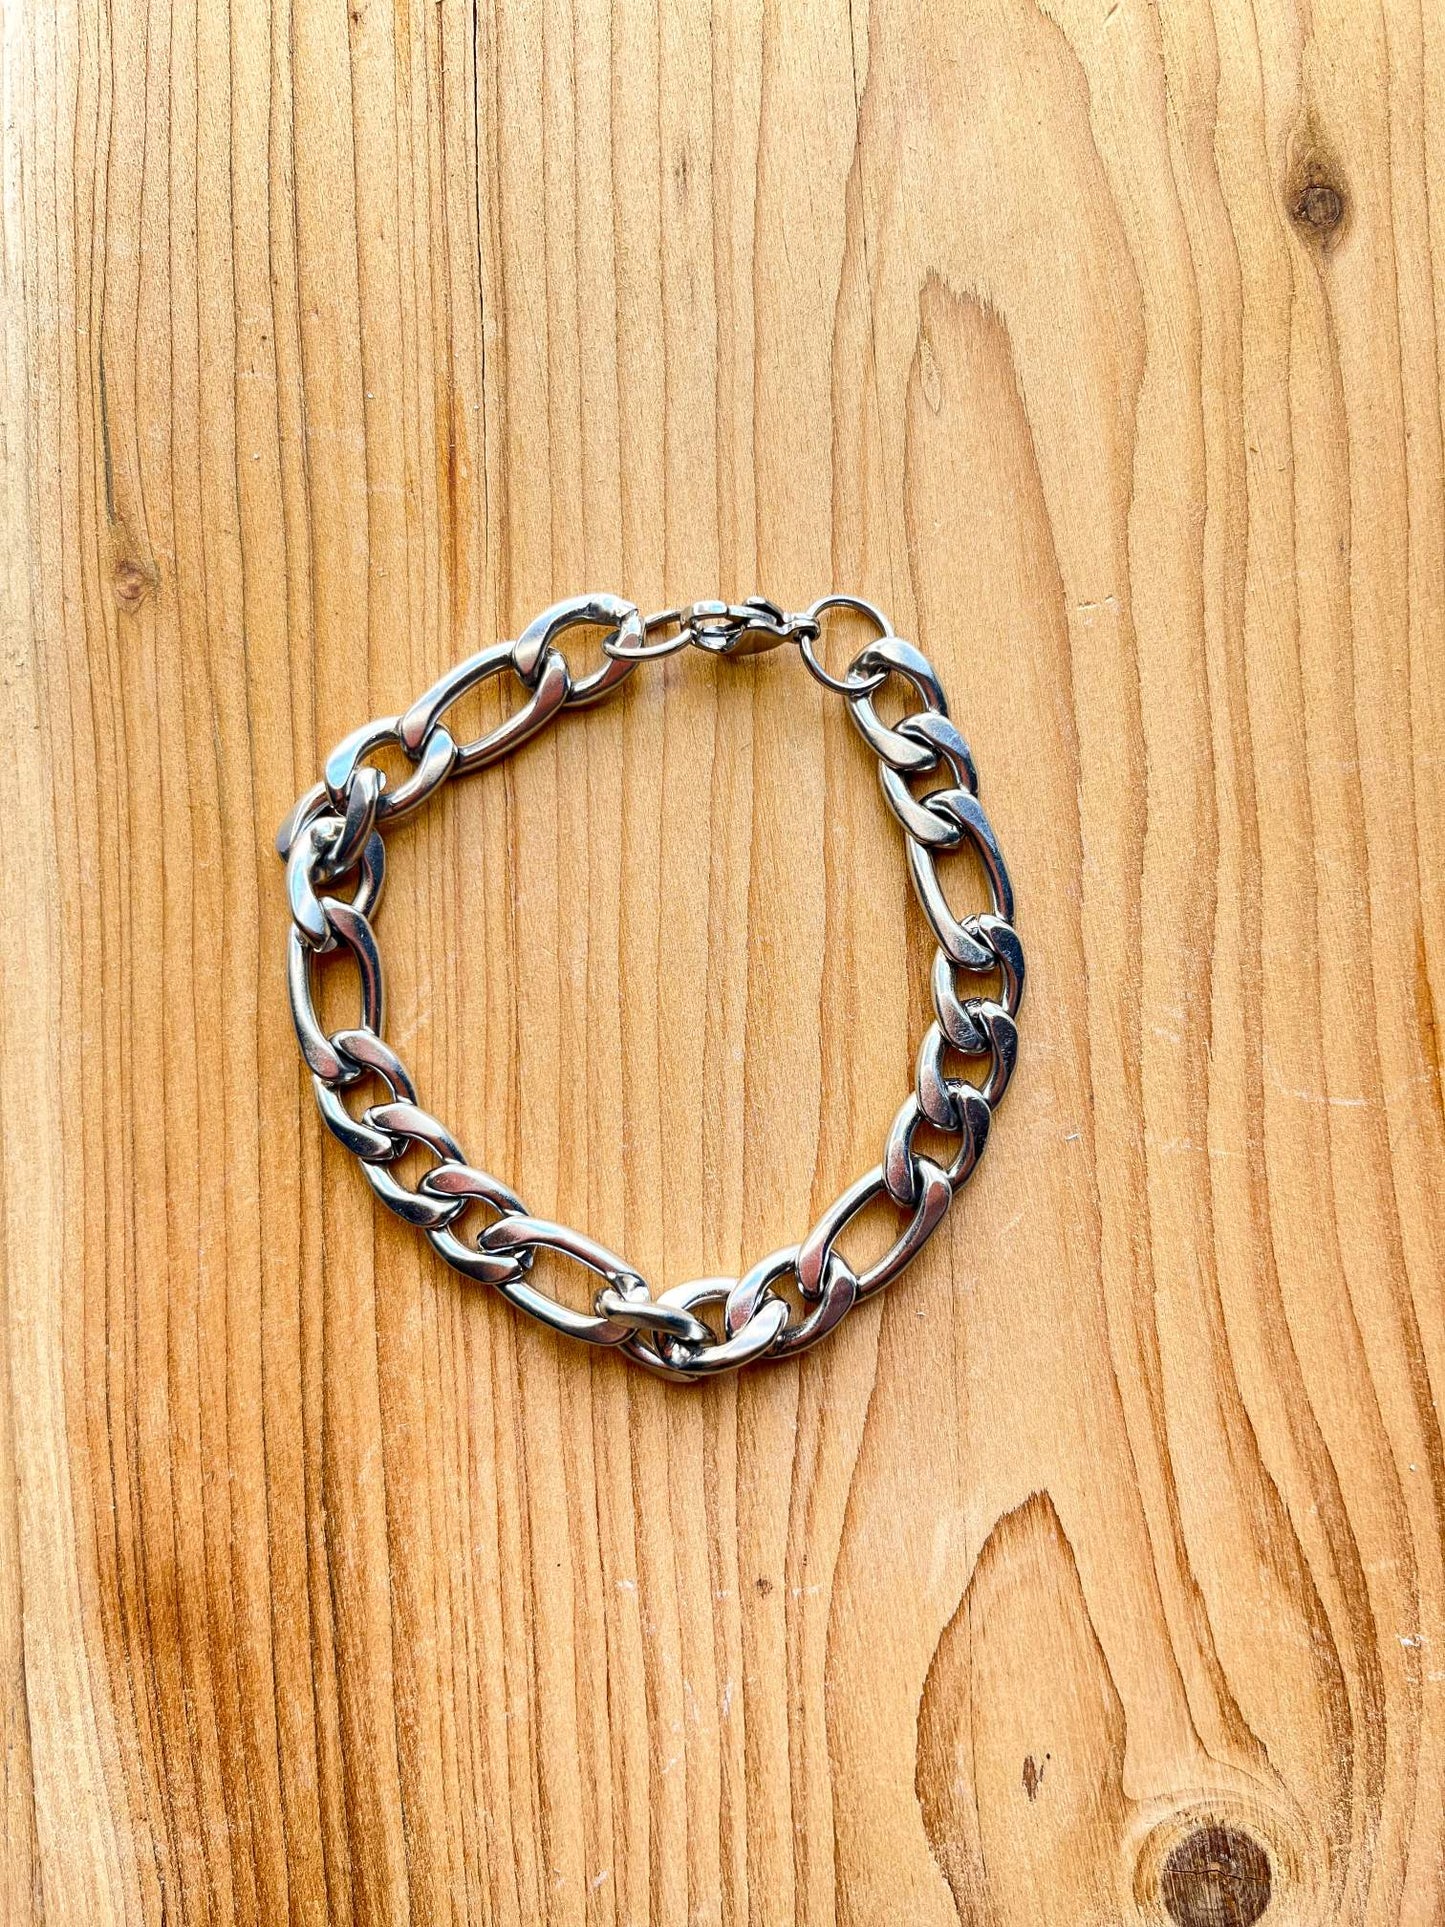 Thin Stainless Steel Adjustable Silver Bracelet